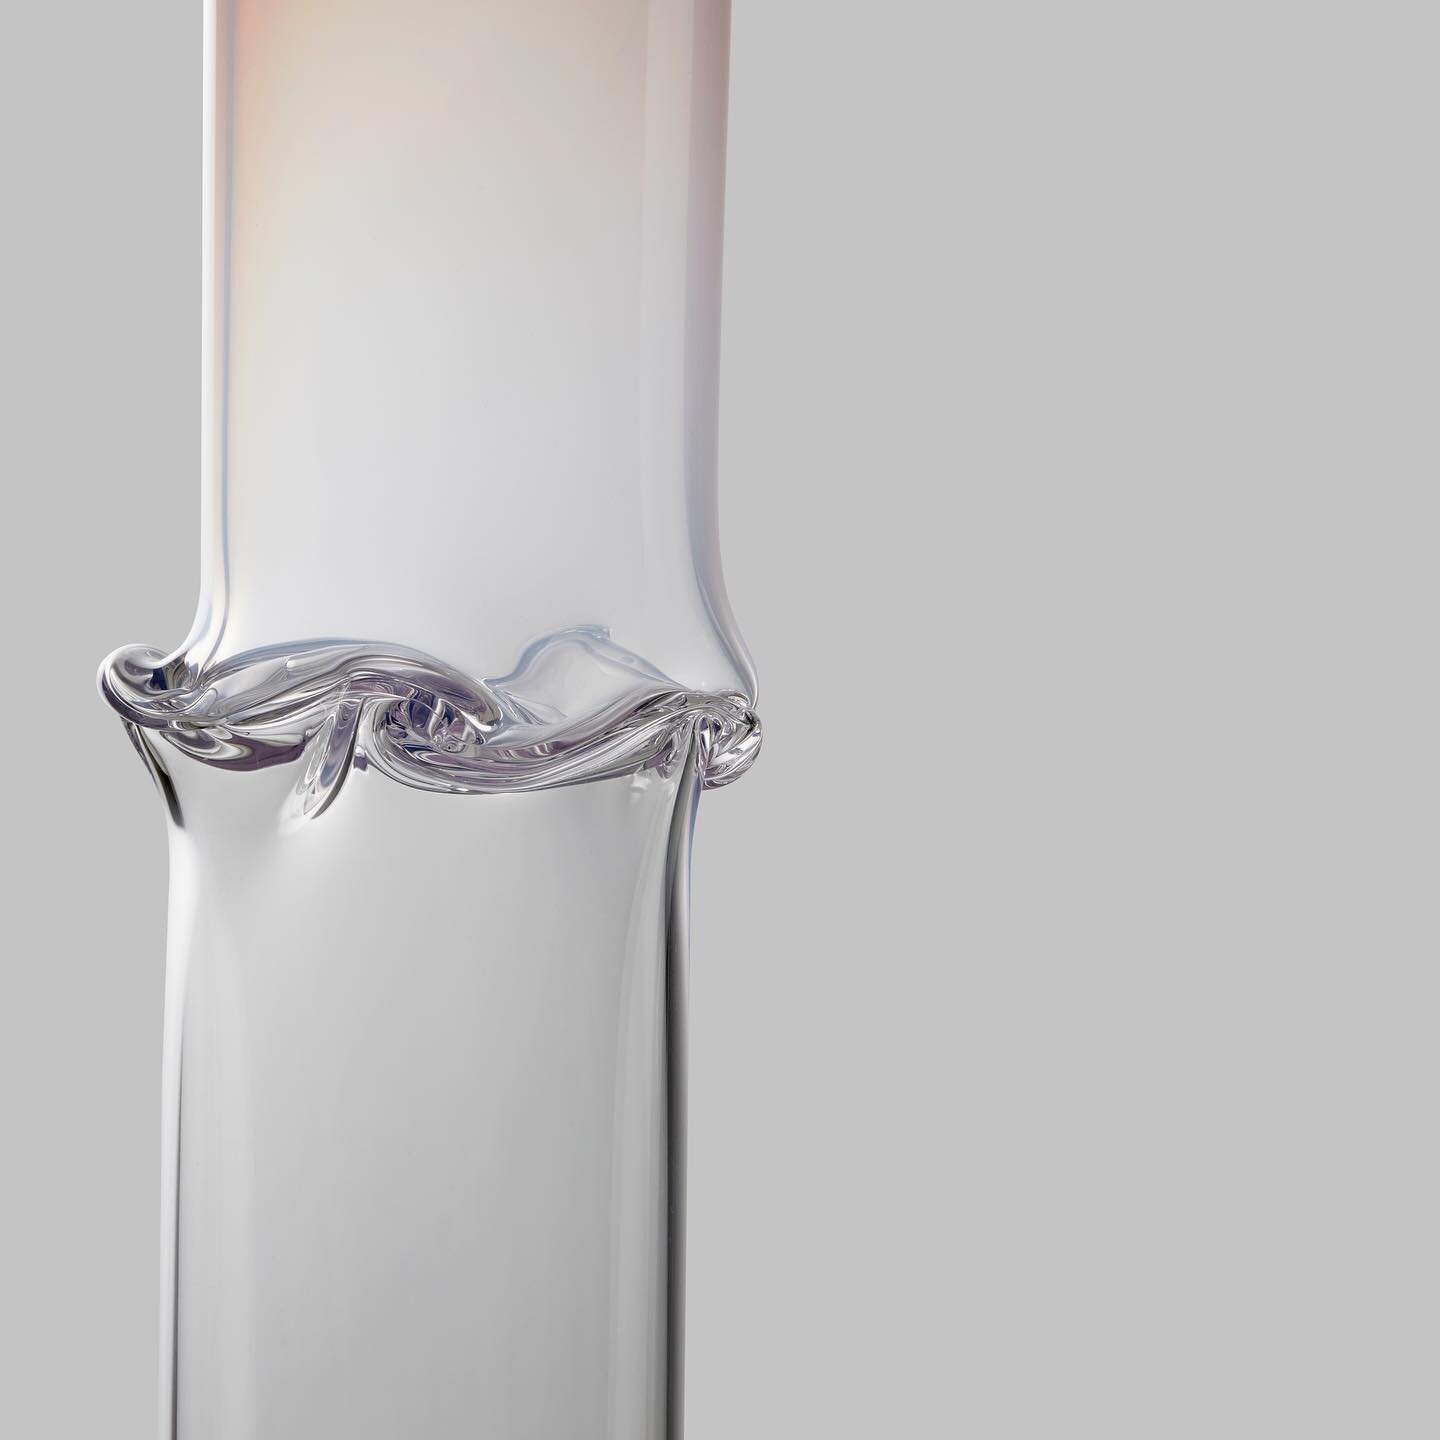 Torsion in Alt Rosa (detail) available at Gallery Ten, Edinburgh ✨

📍 @gallerytenart 
📷 @redforgestudios 
#blownglass #handmade #clear #glass #torsion #folds #twist #ripples #distortion #reflection #cylinder #vessel #texture #crumpled #gloss #smoot